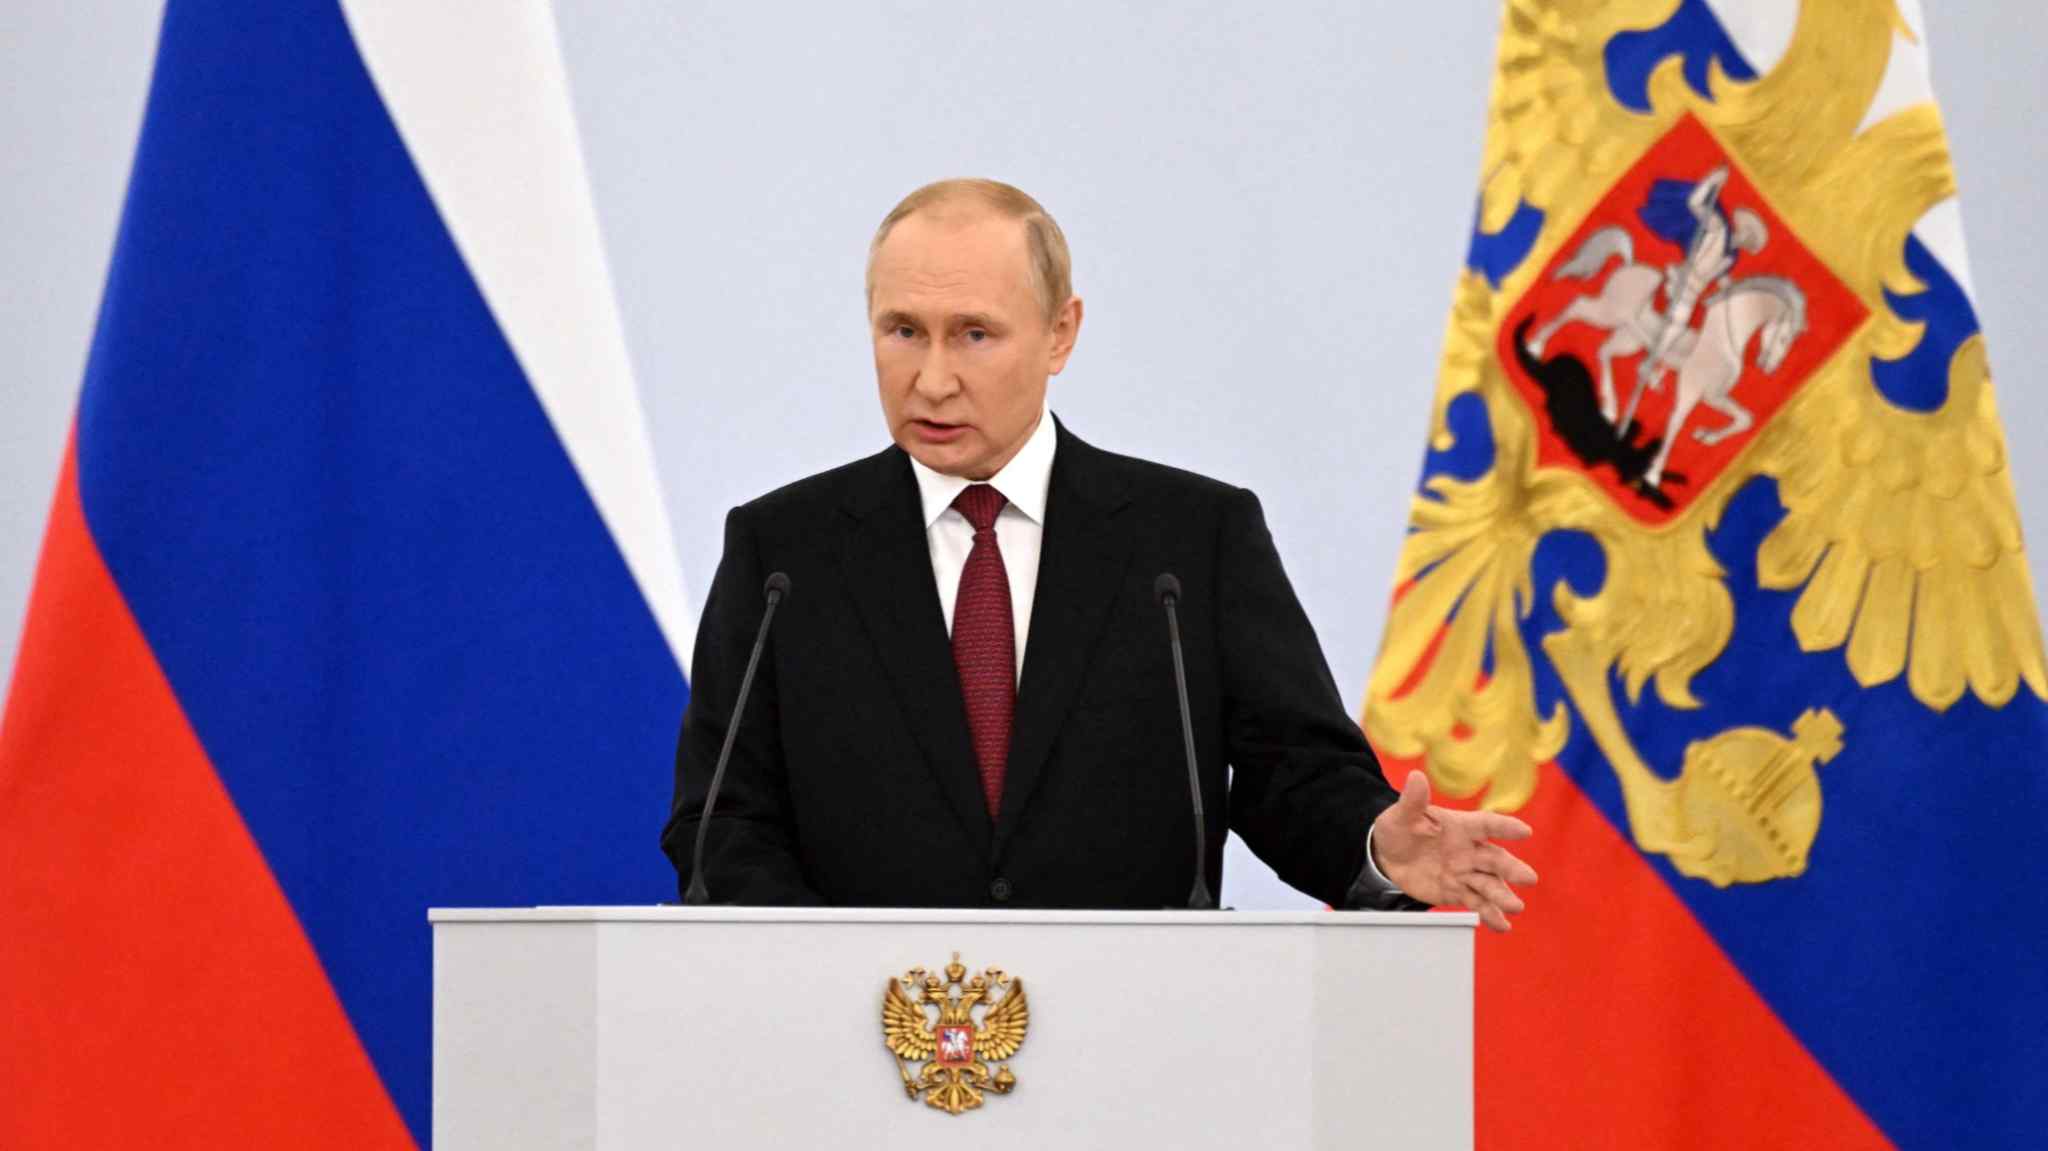 Putin annexes four Ukrainian regions